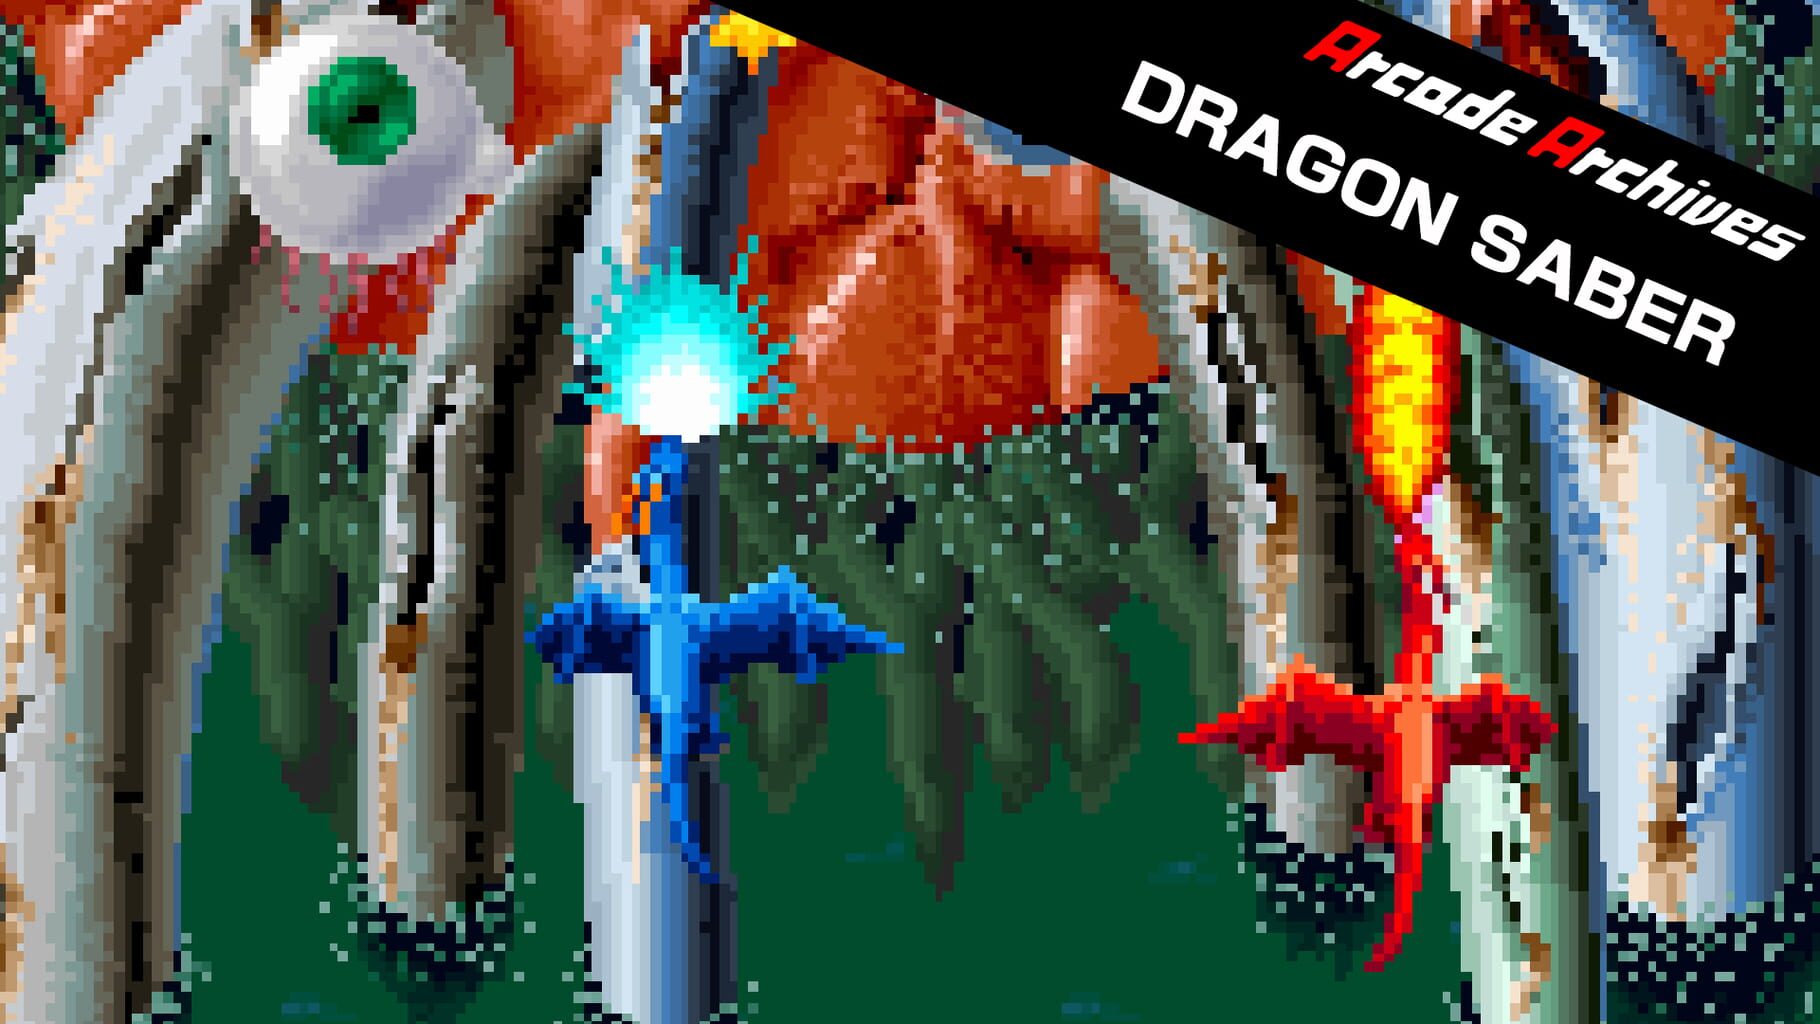 Arcade Archives: Dragon Saber artwork